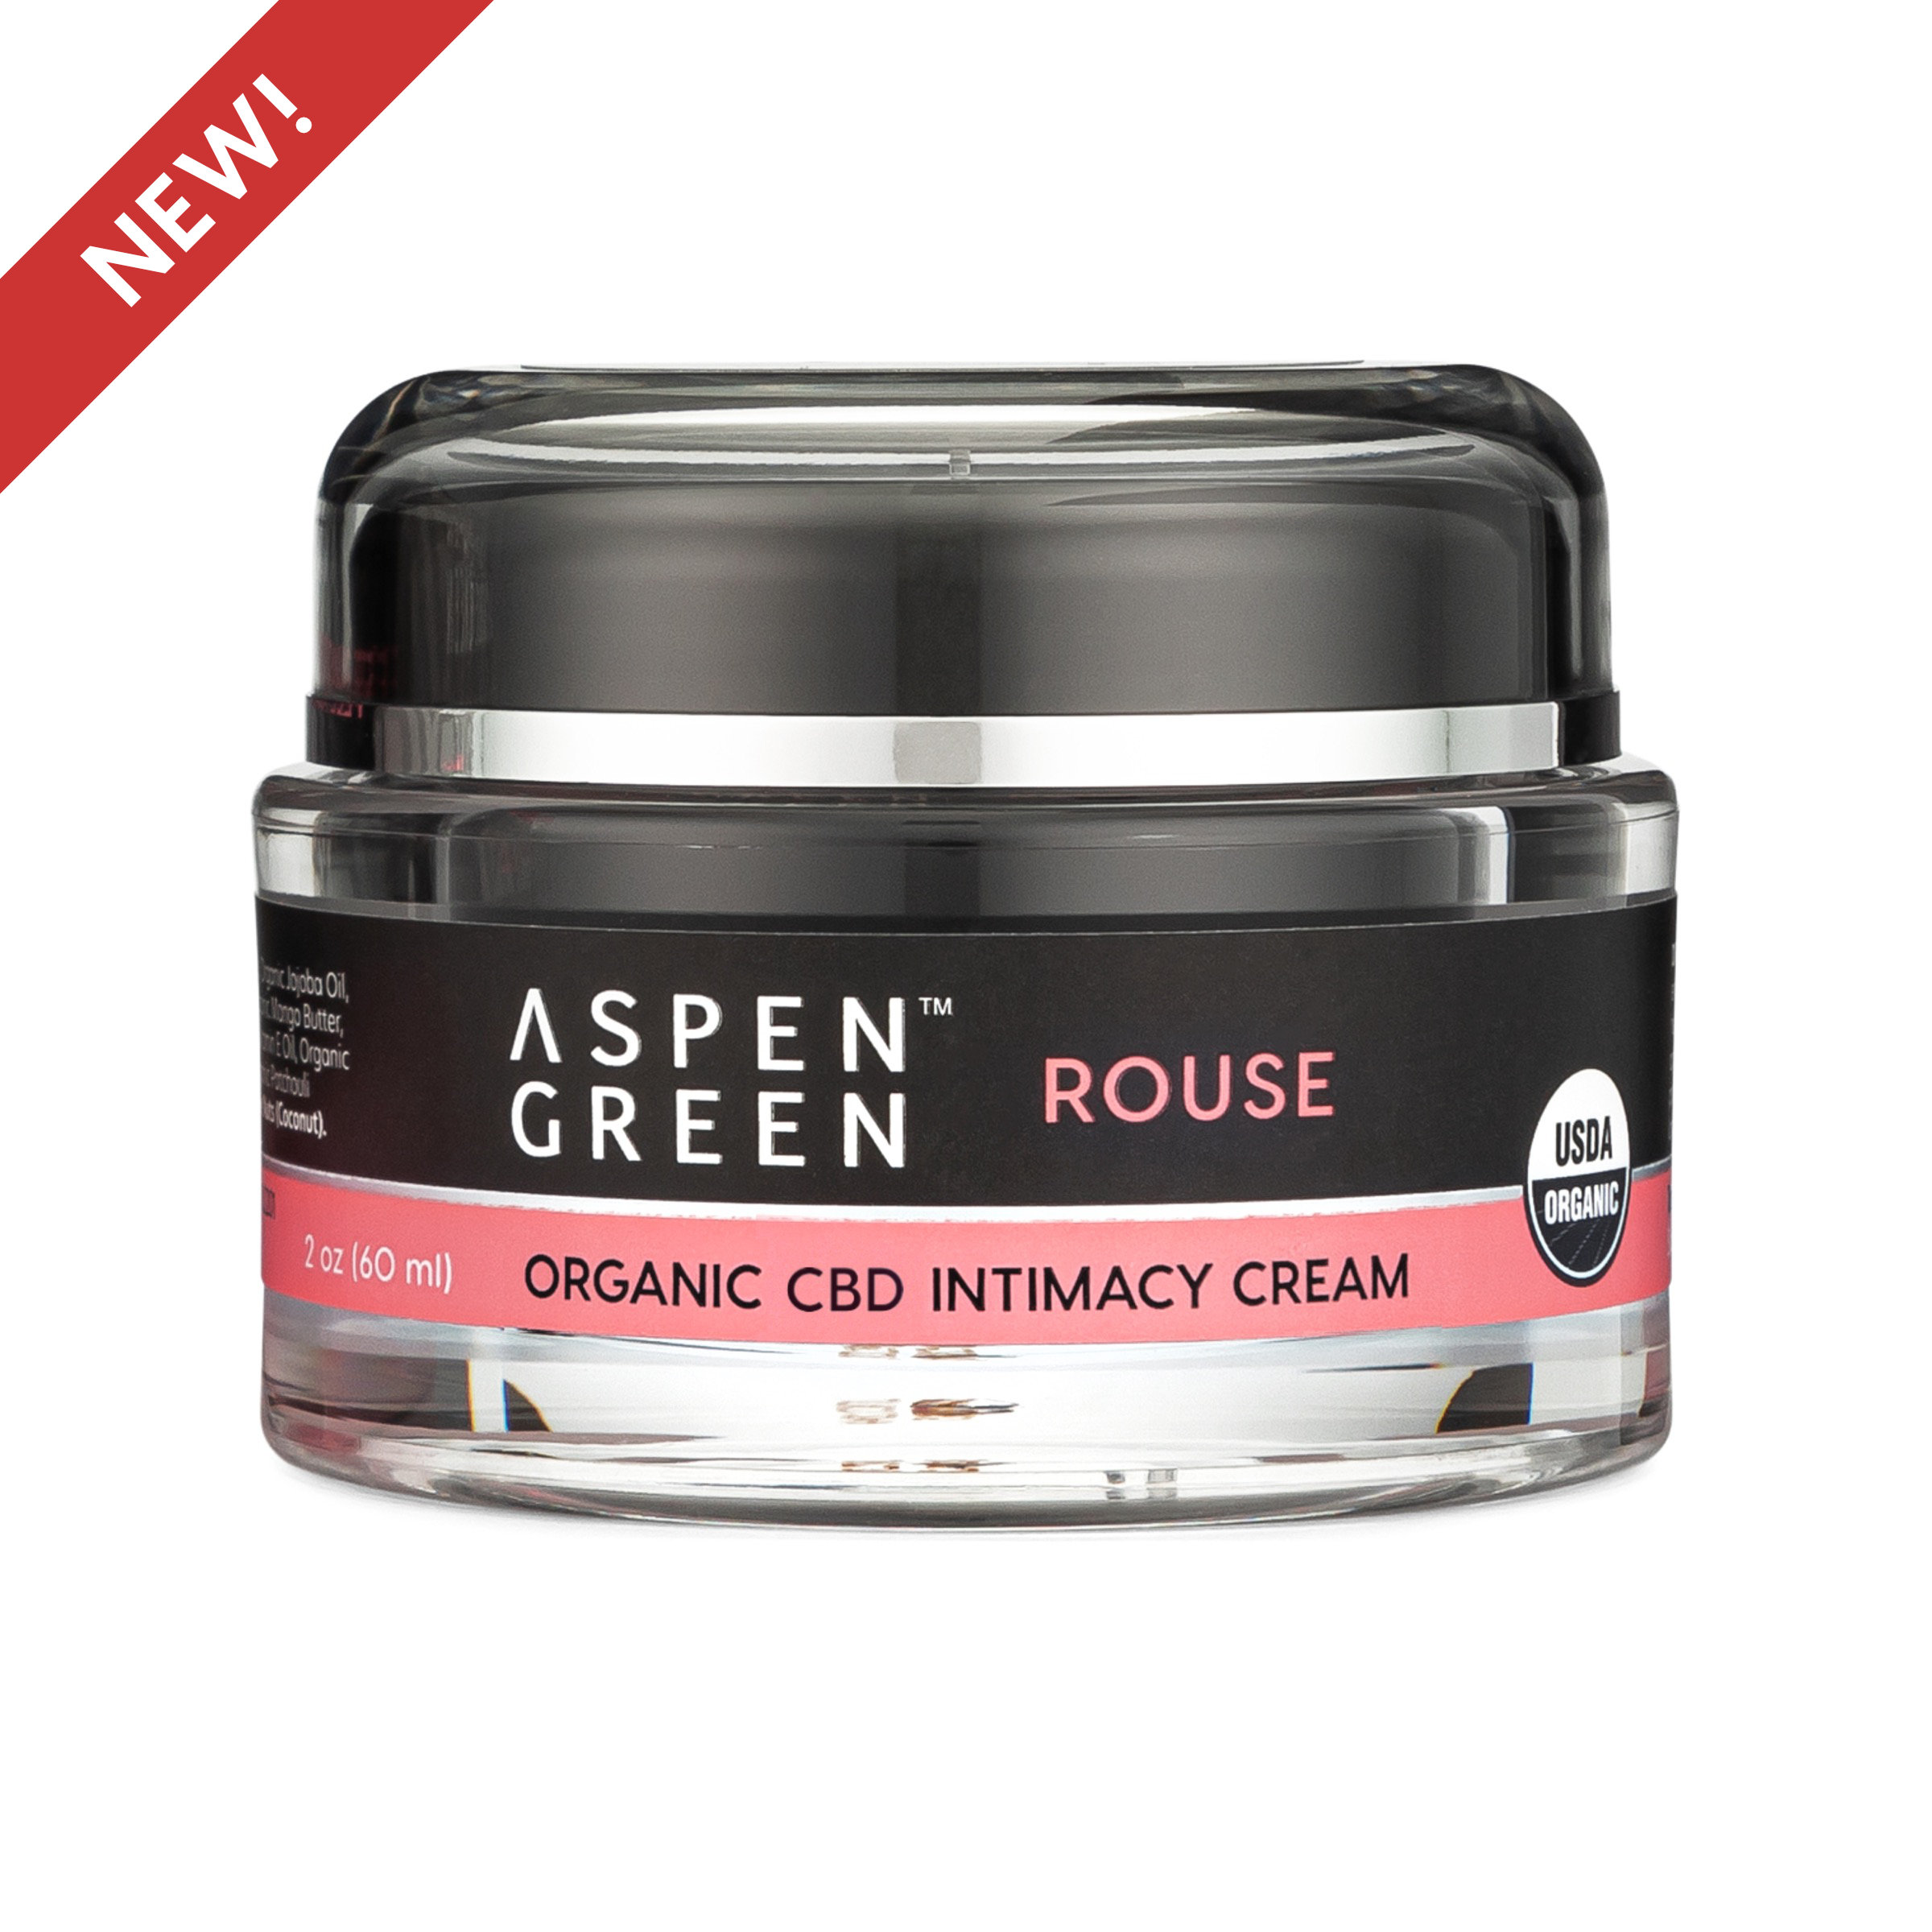 aspen-green-rouse-cbd-intimacy-cream-jar-front-new-1